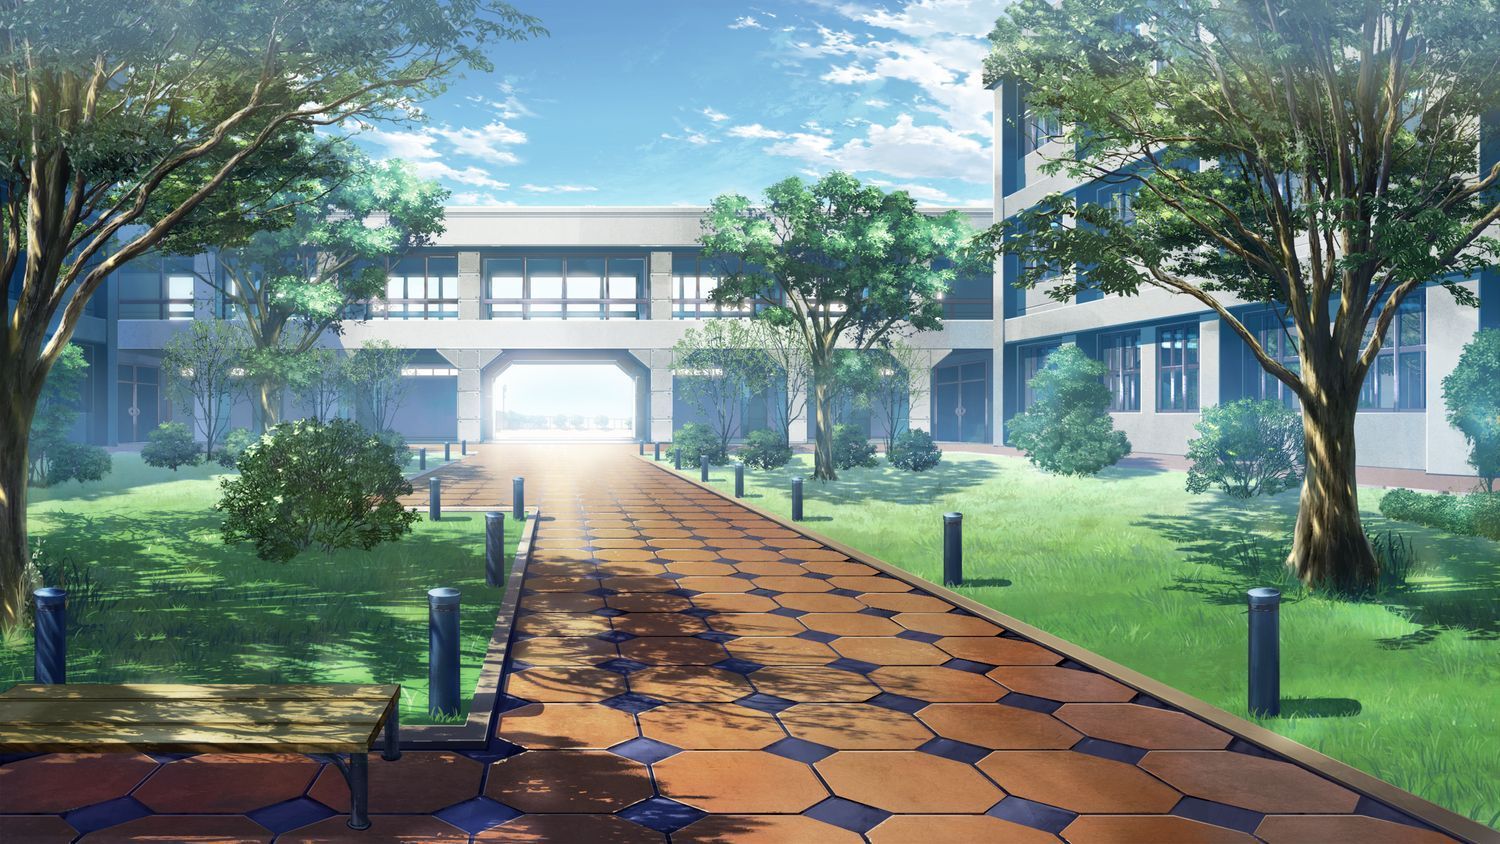 Anime School Scenery Wallpaper Free Anime School Scenery Background